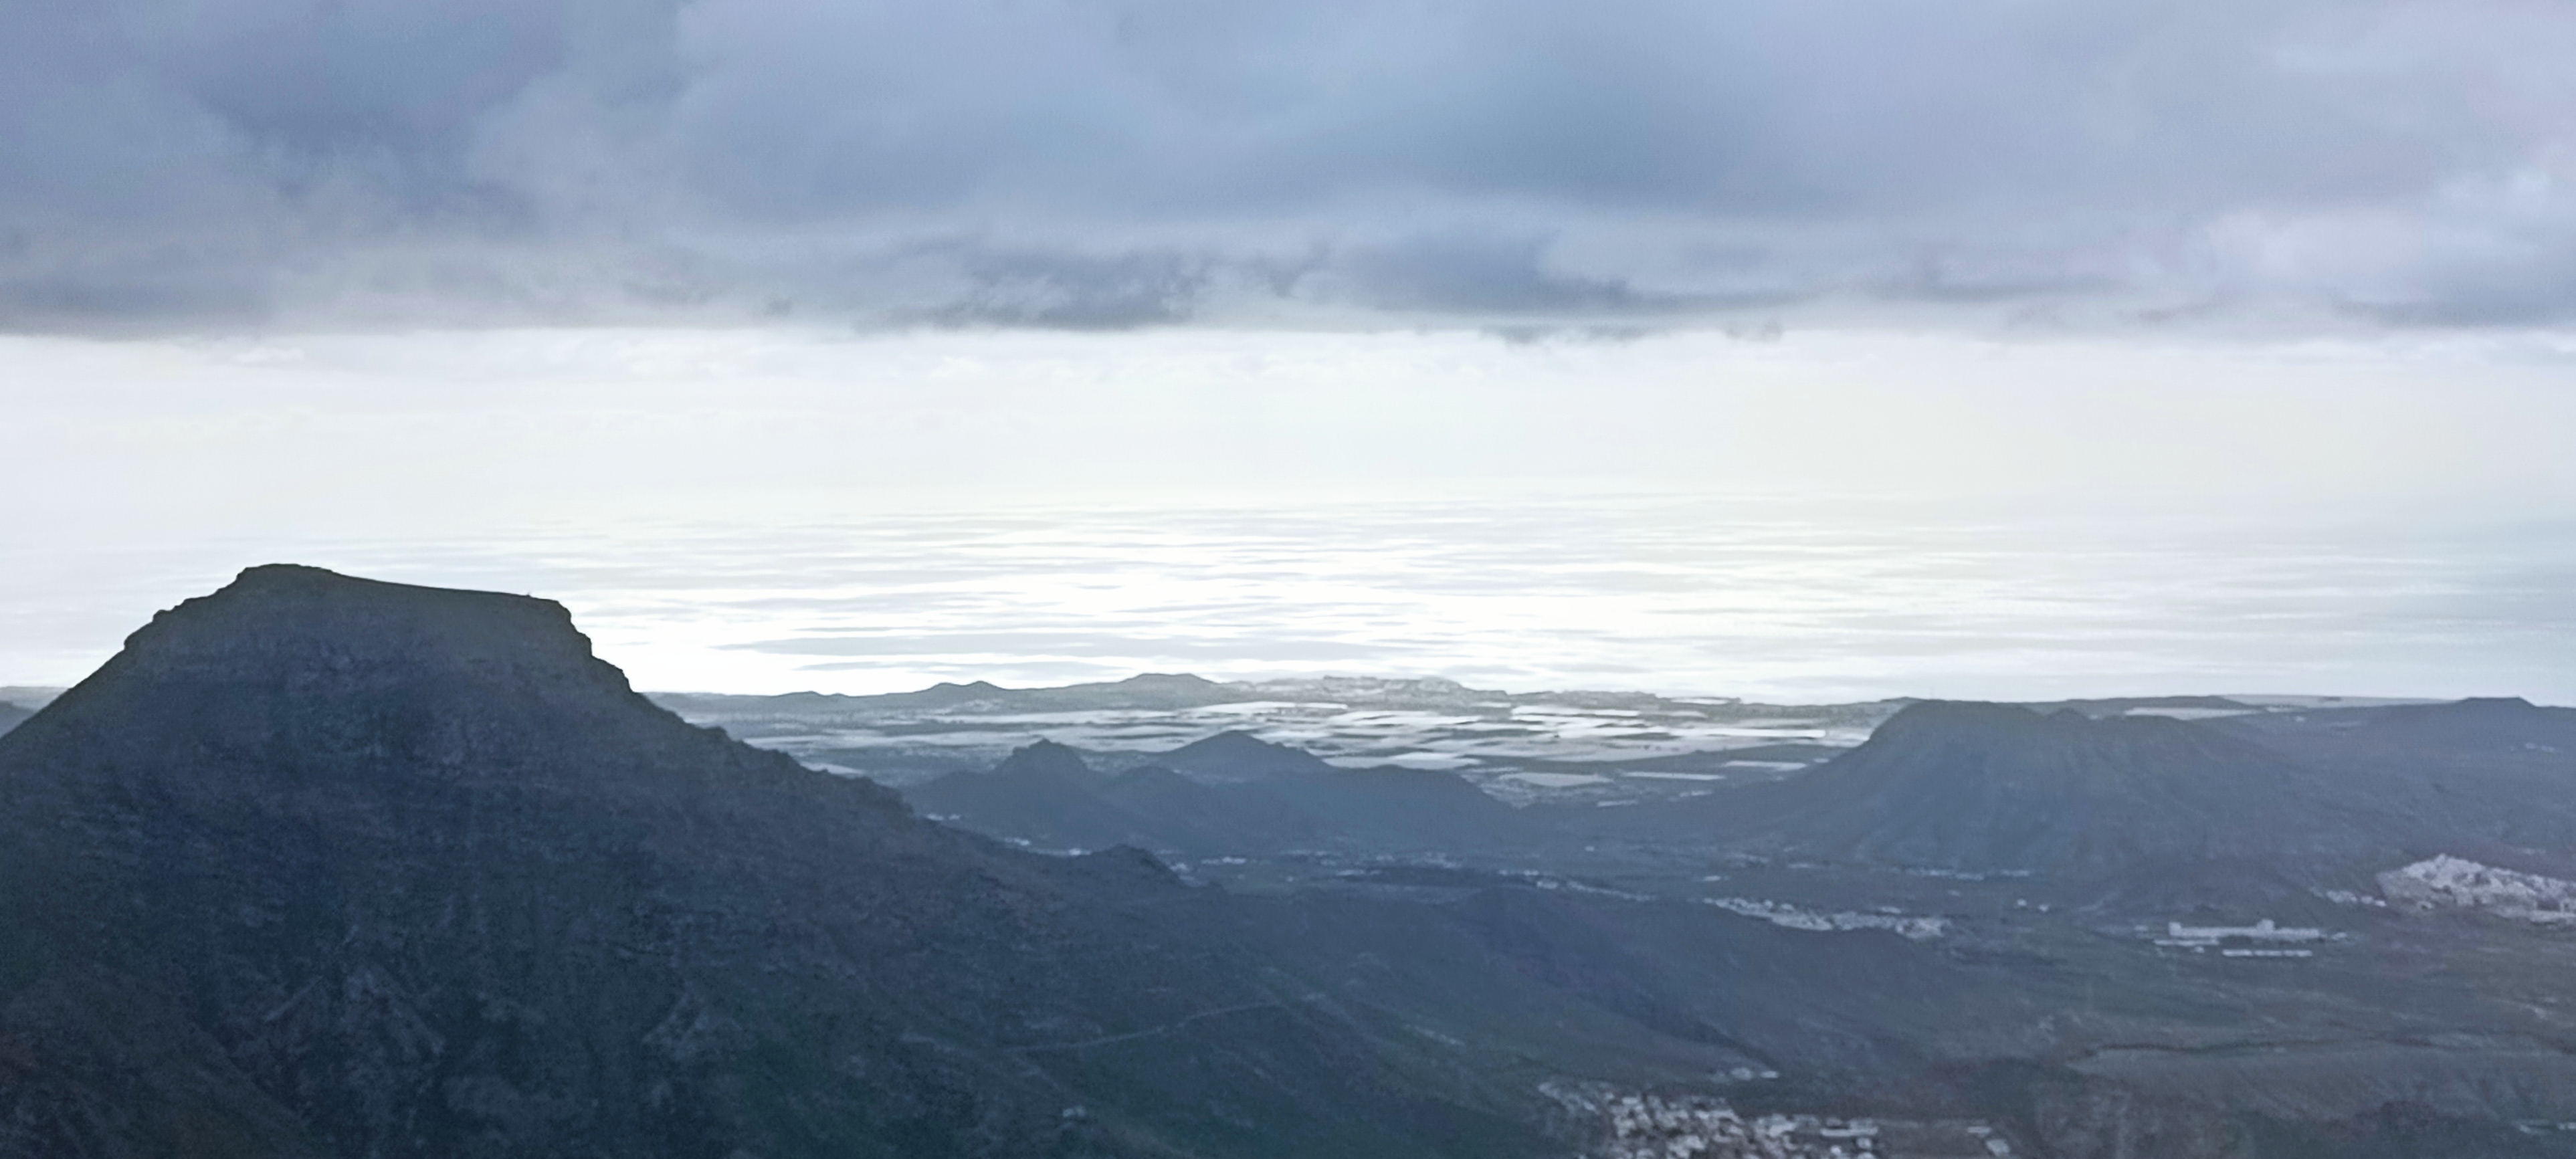 Picture from Area related to Roque del Conde, Aguilas del Teide, Costa Adeje shoot by Romano Serra